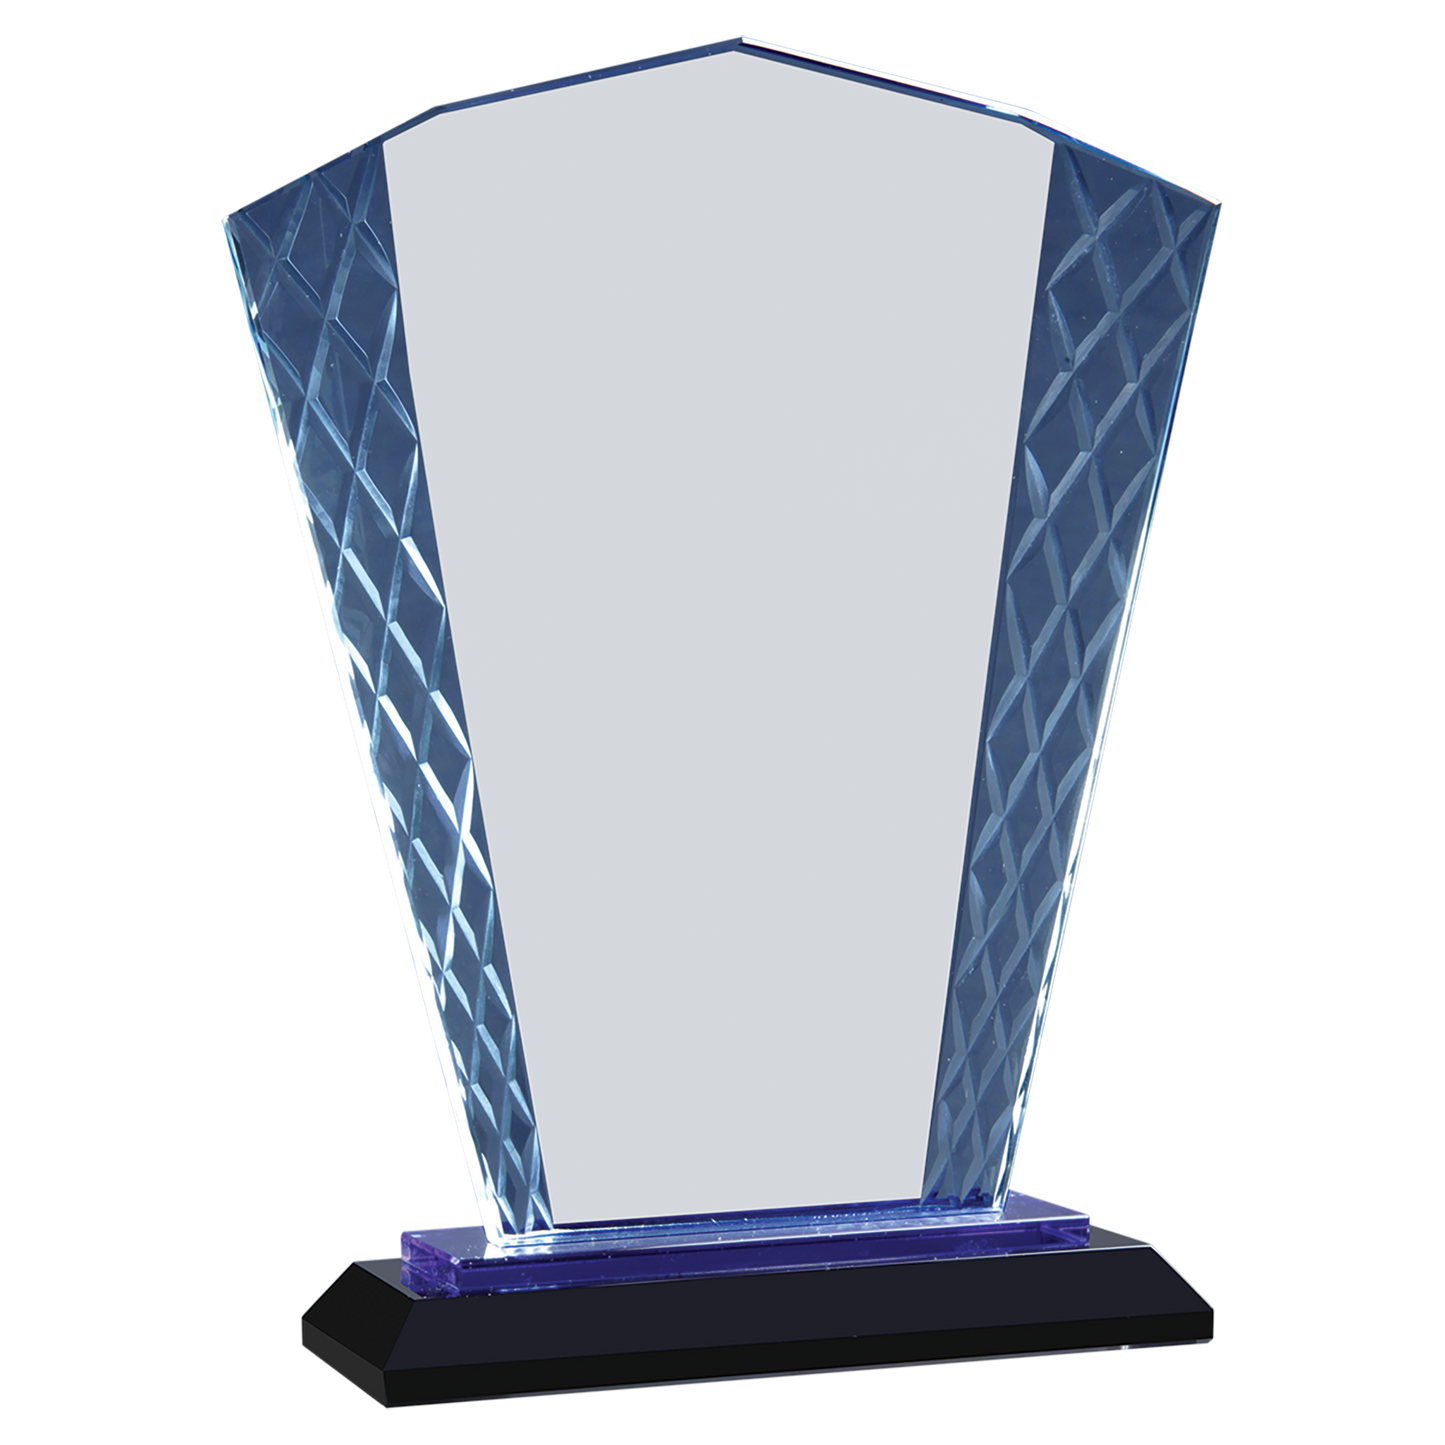 48" Fan Accent Glass on Blue & Black Base Corporate Awards - Glass Awards